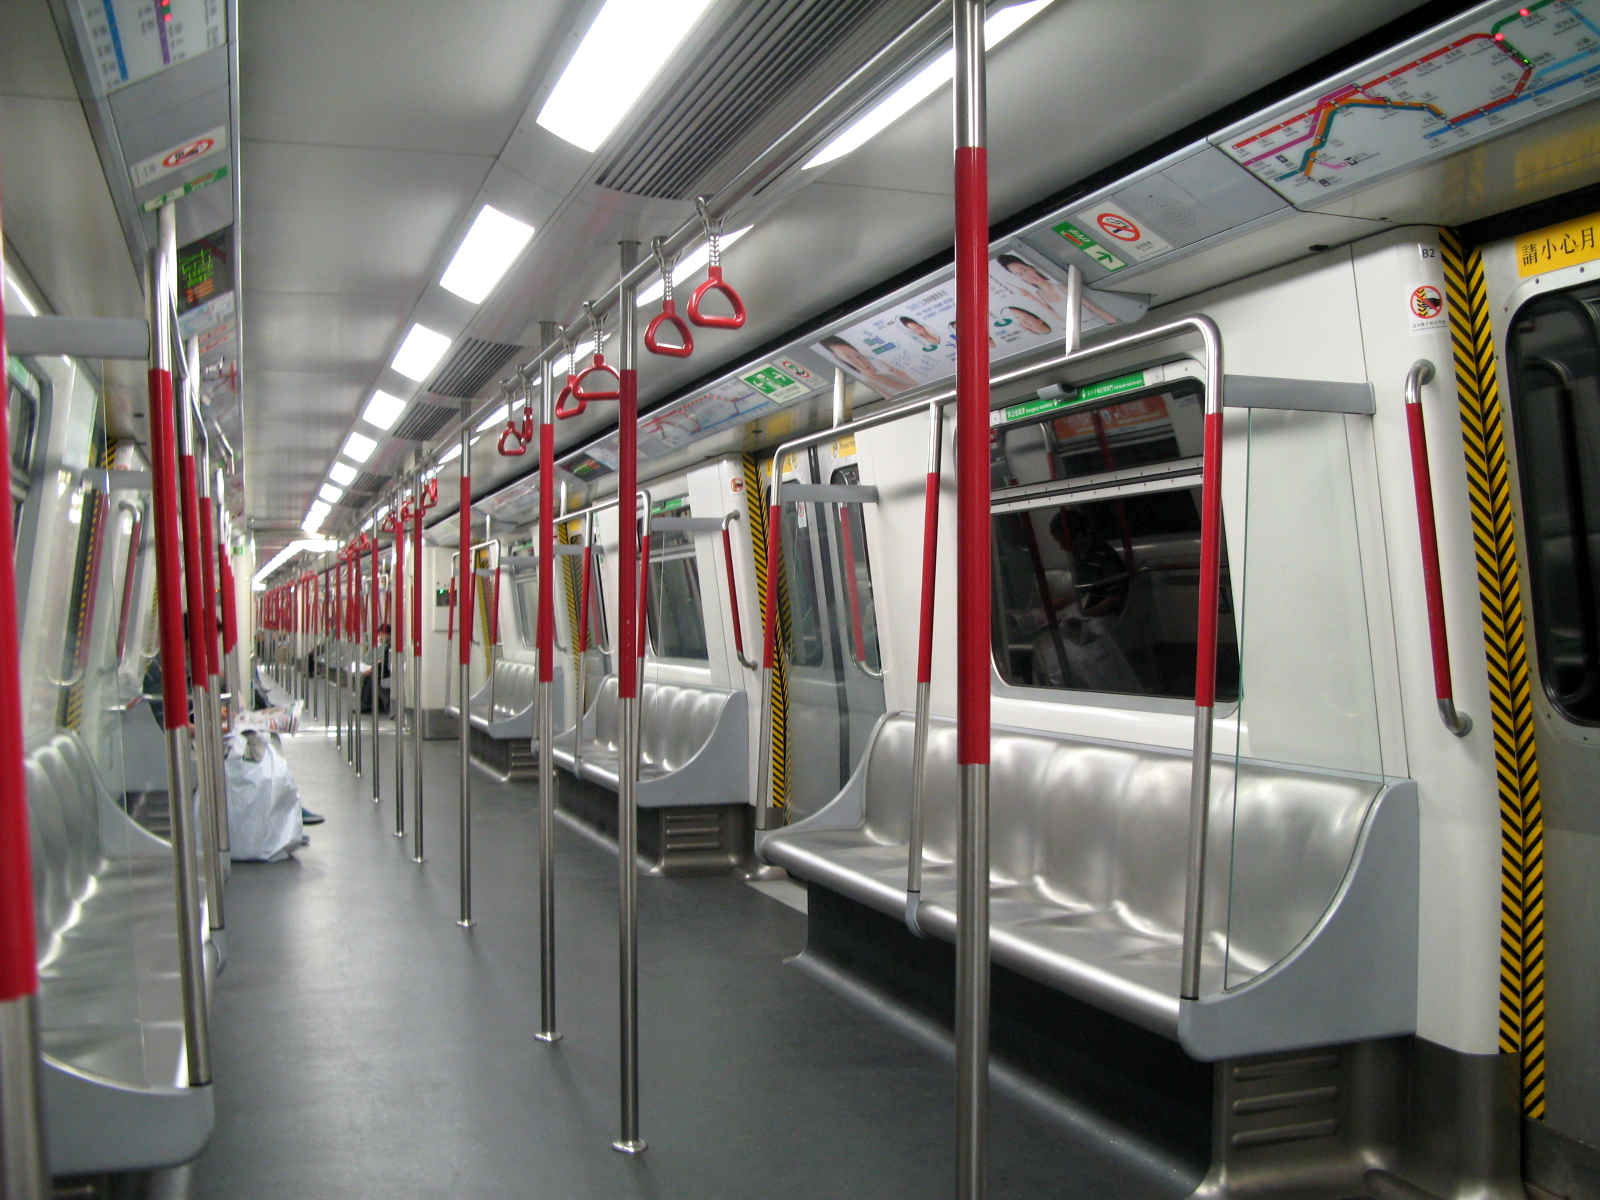 File:HK MTR M-Trains Interior.jpg - Wikimedia Commons